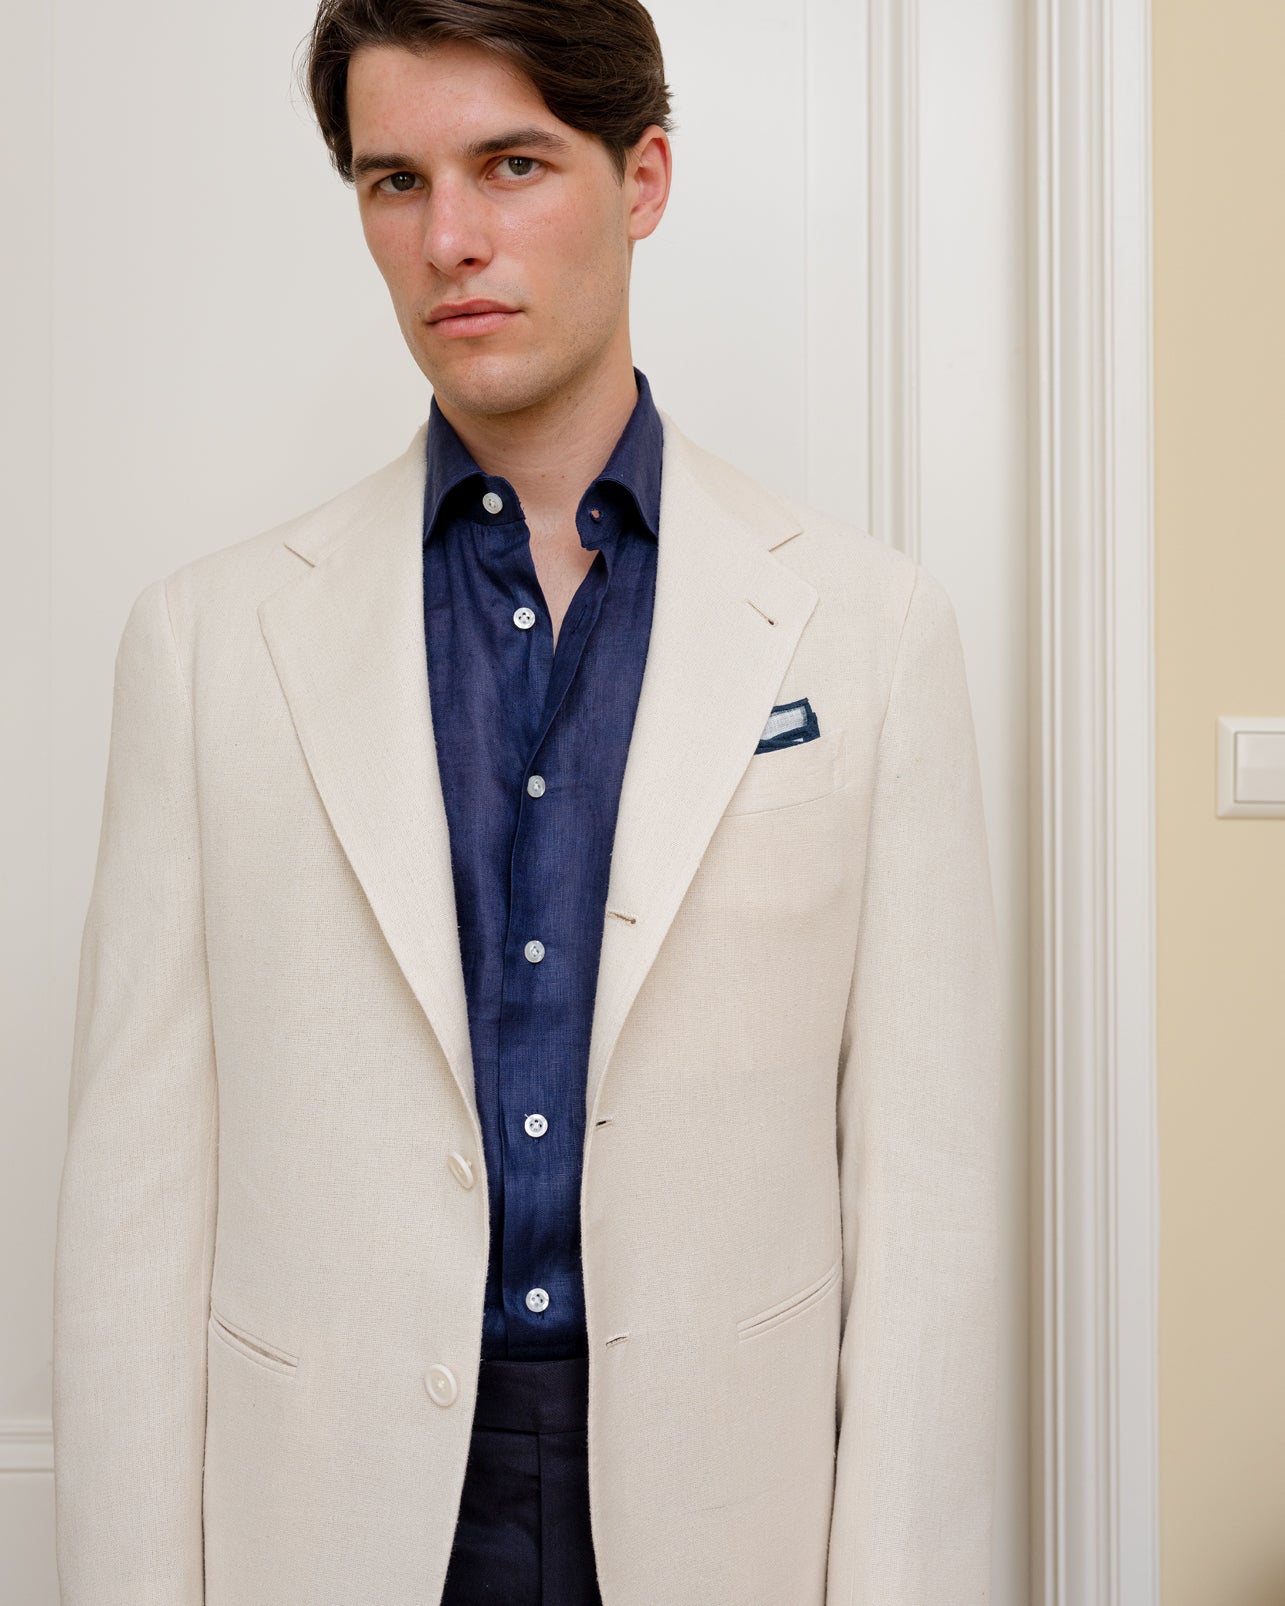 Man wearing a cream silk sport coat combined with navy linen spread collar shirt